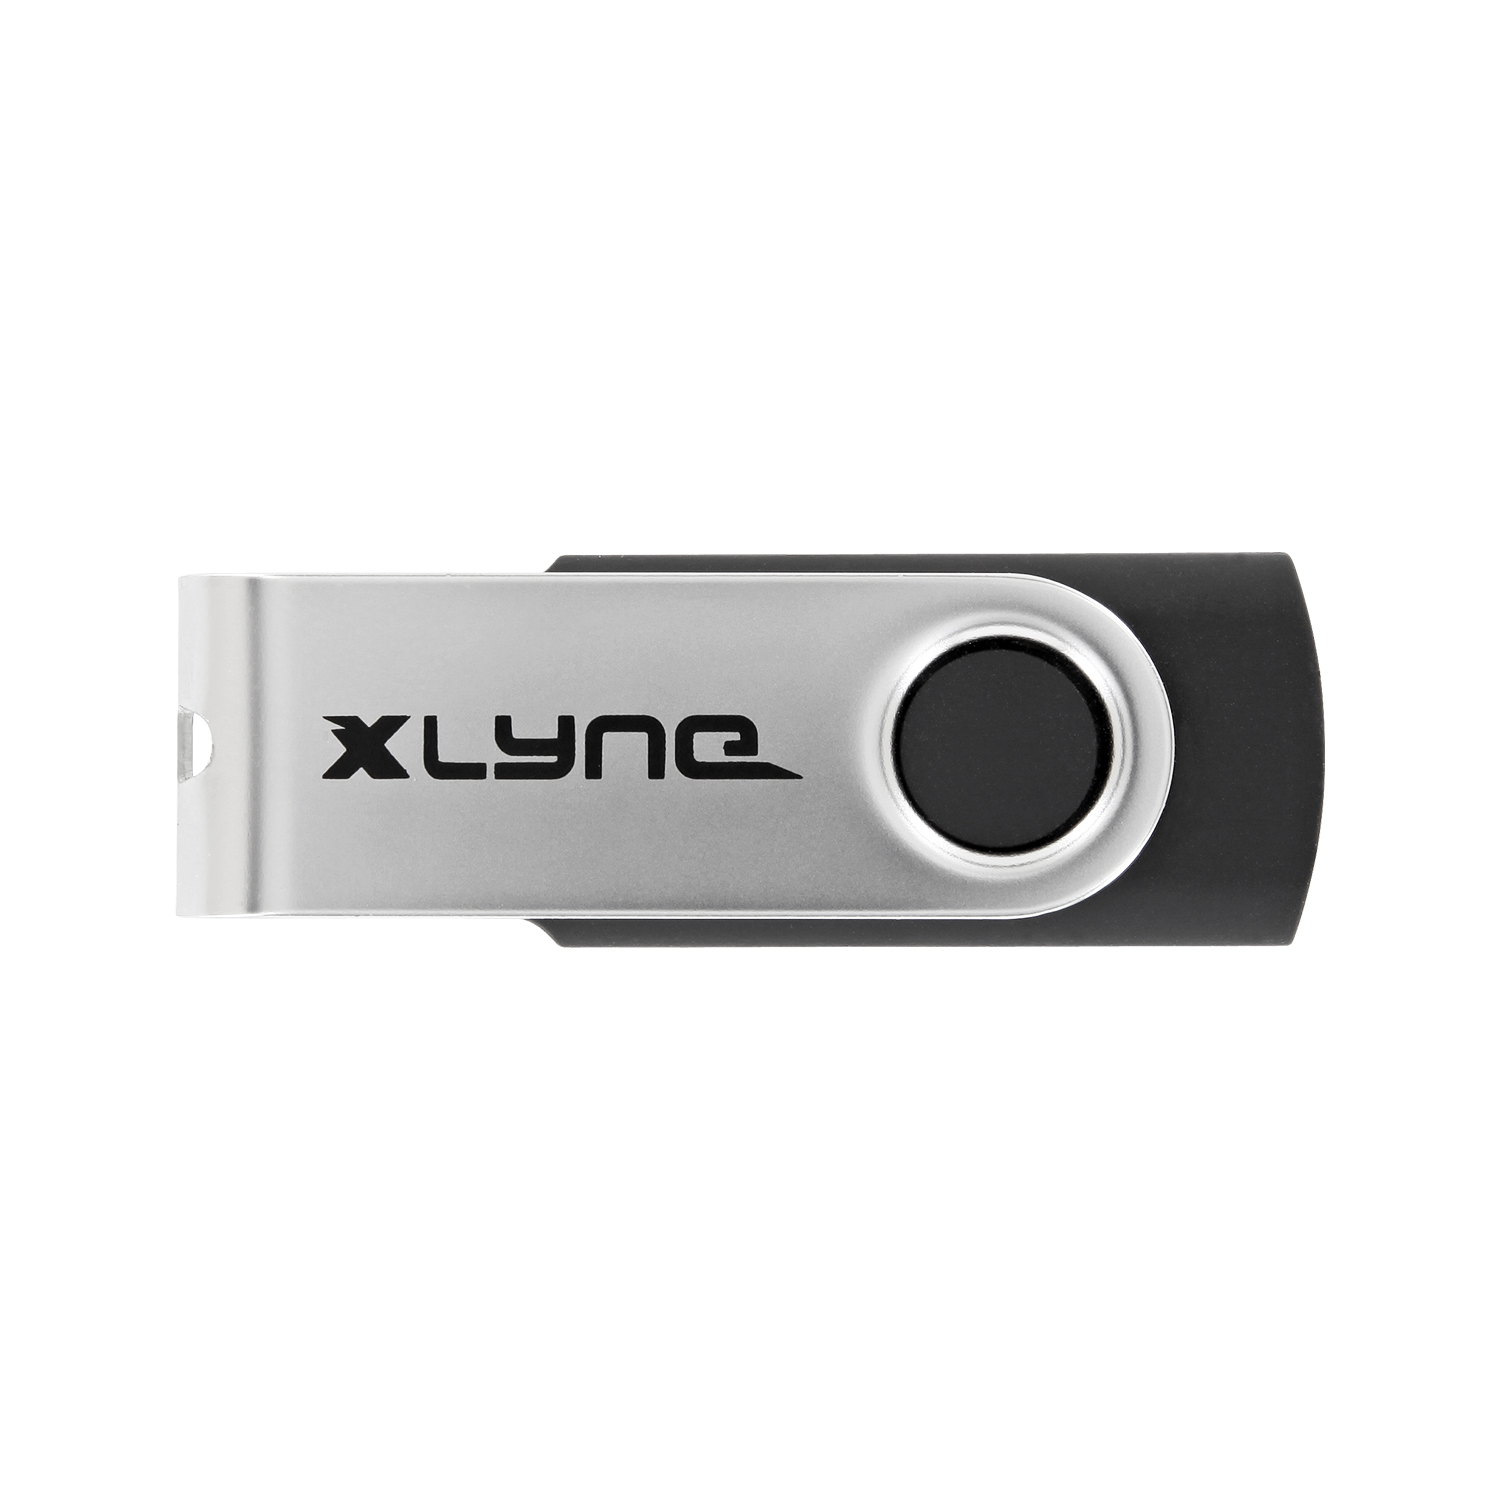 XLYNE USB 2.0 - USB 4 SILBER, GB) / Stick GB 4 (SCHWARZ